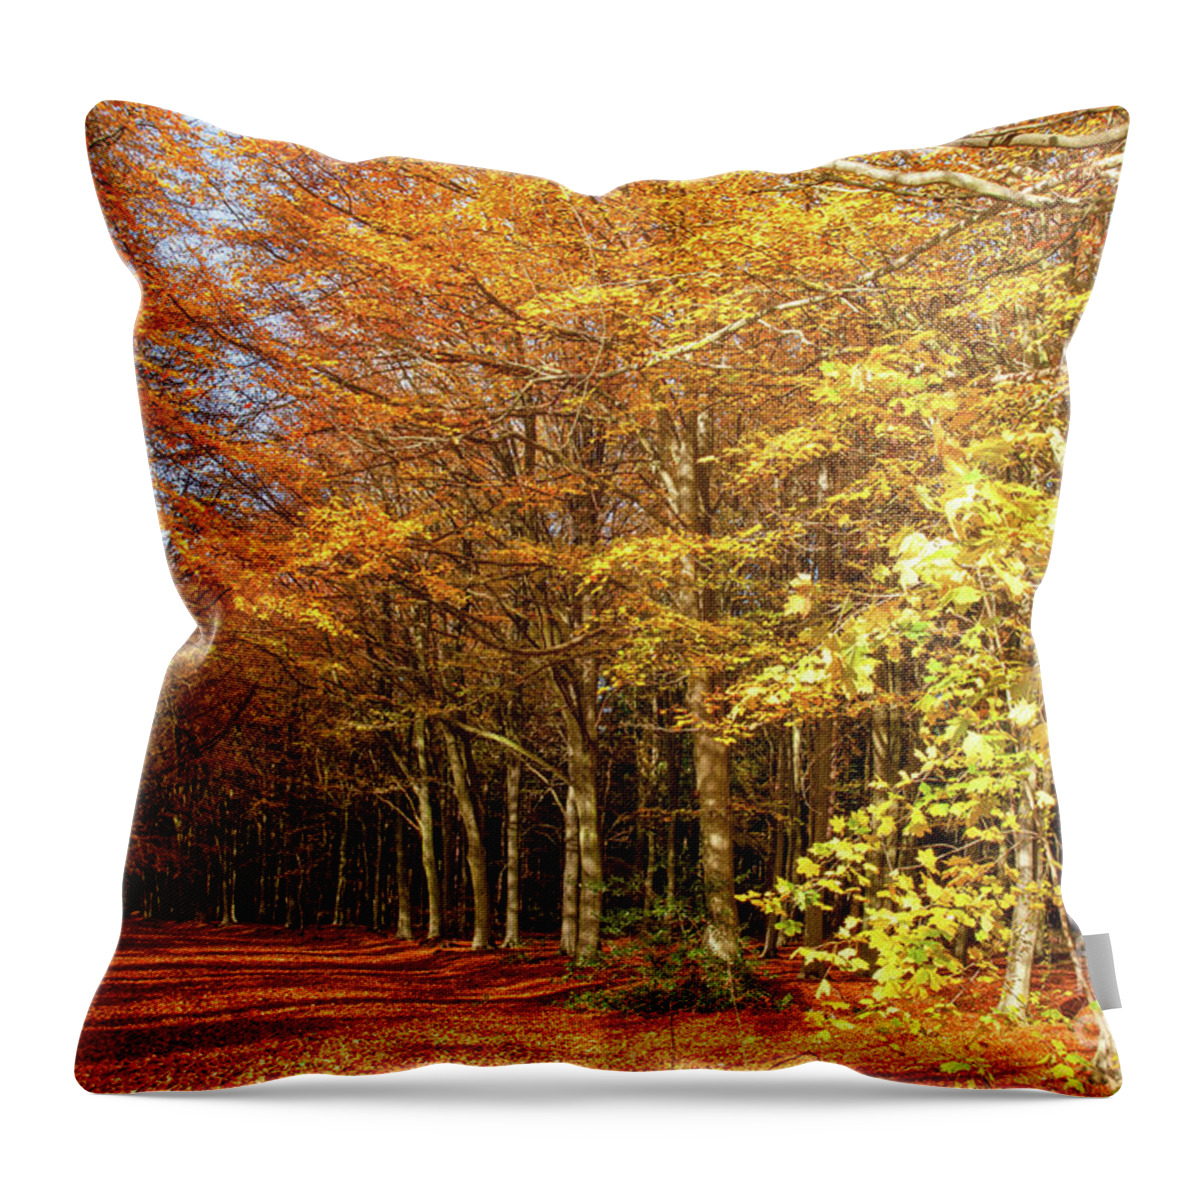 Norfolk Throw Pillow featuring the photograph Avenue through autumn forest sunrise by Simon Bratt